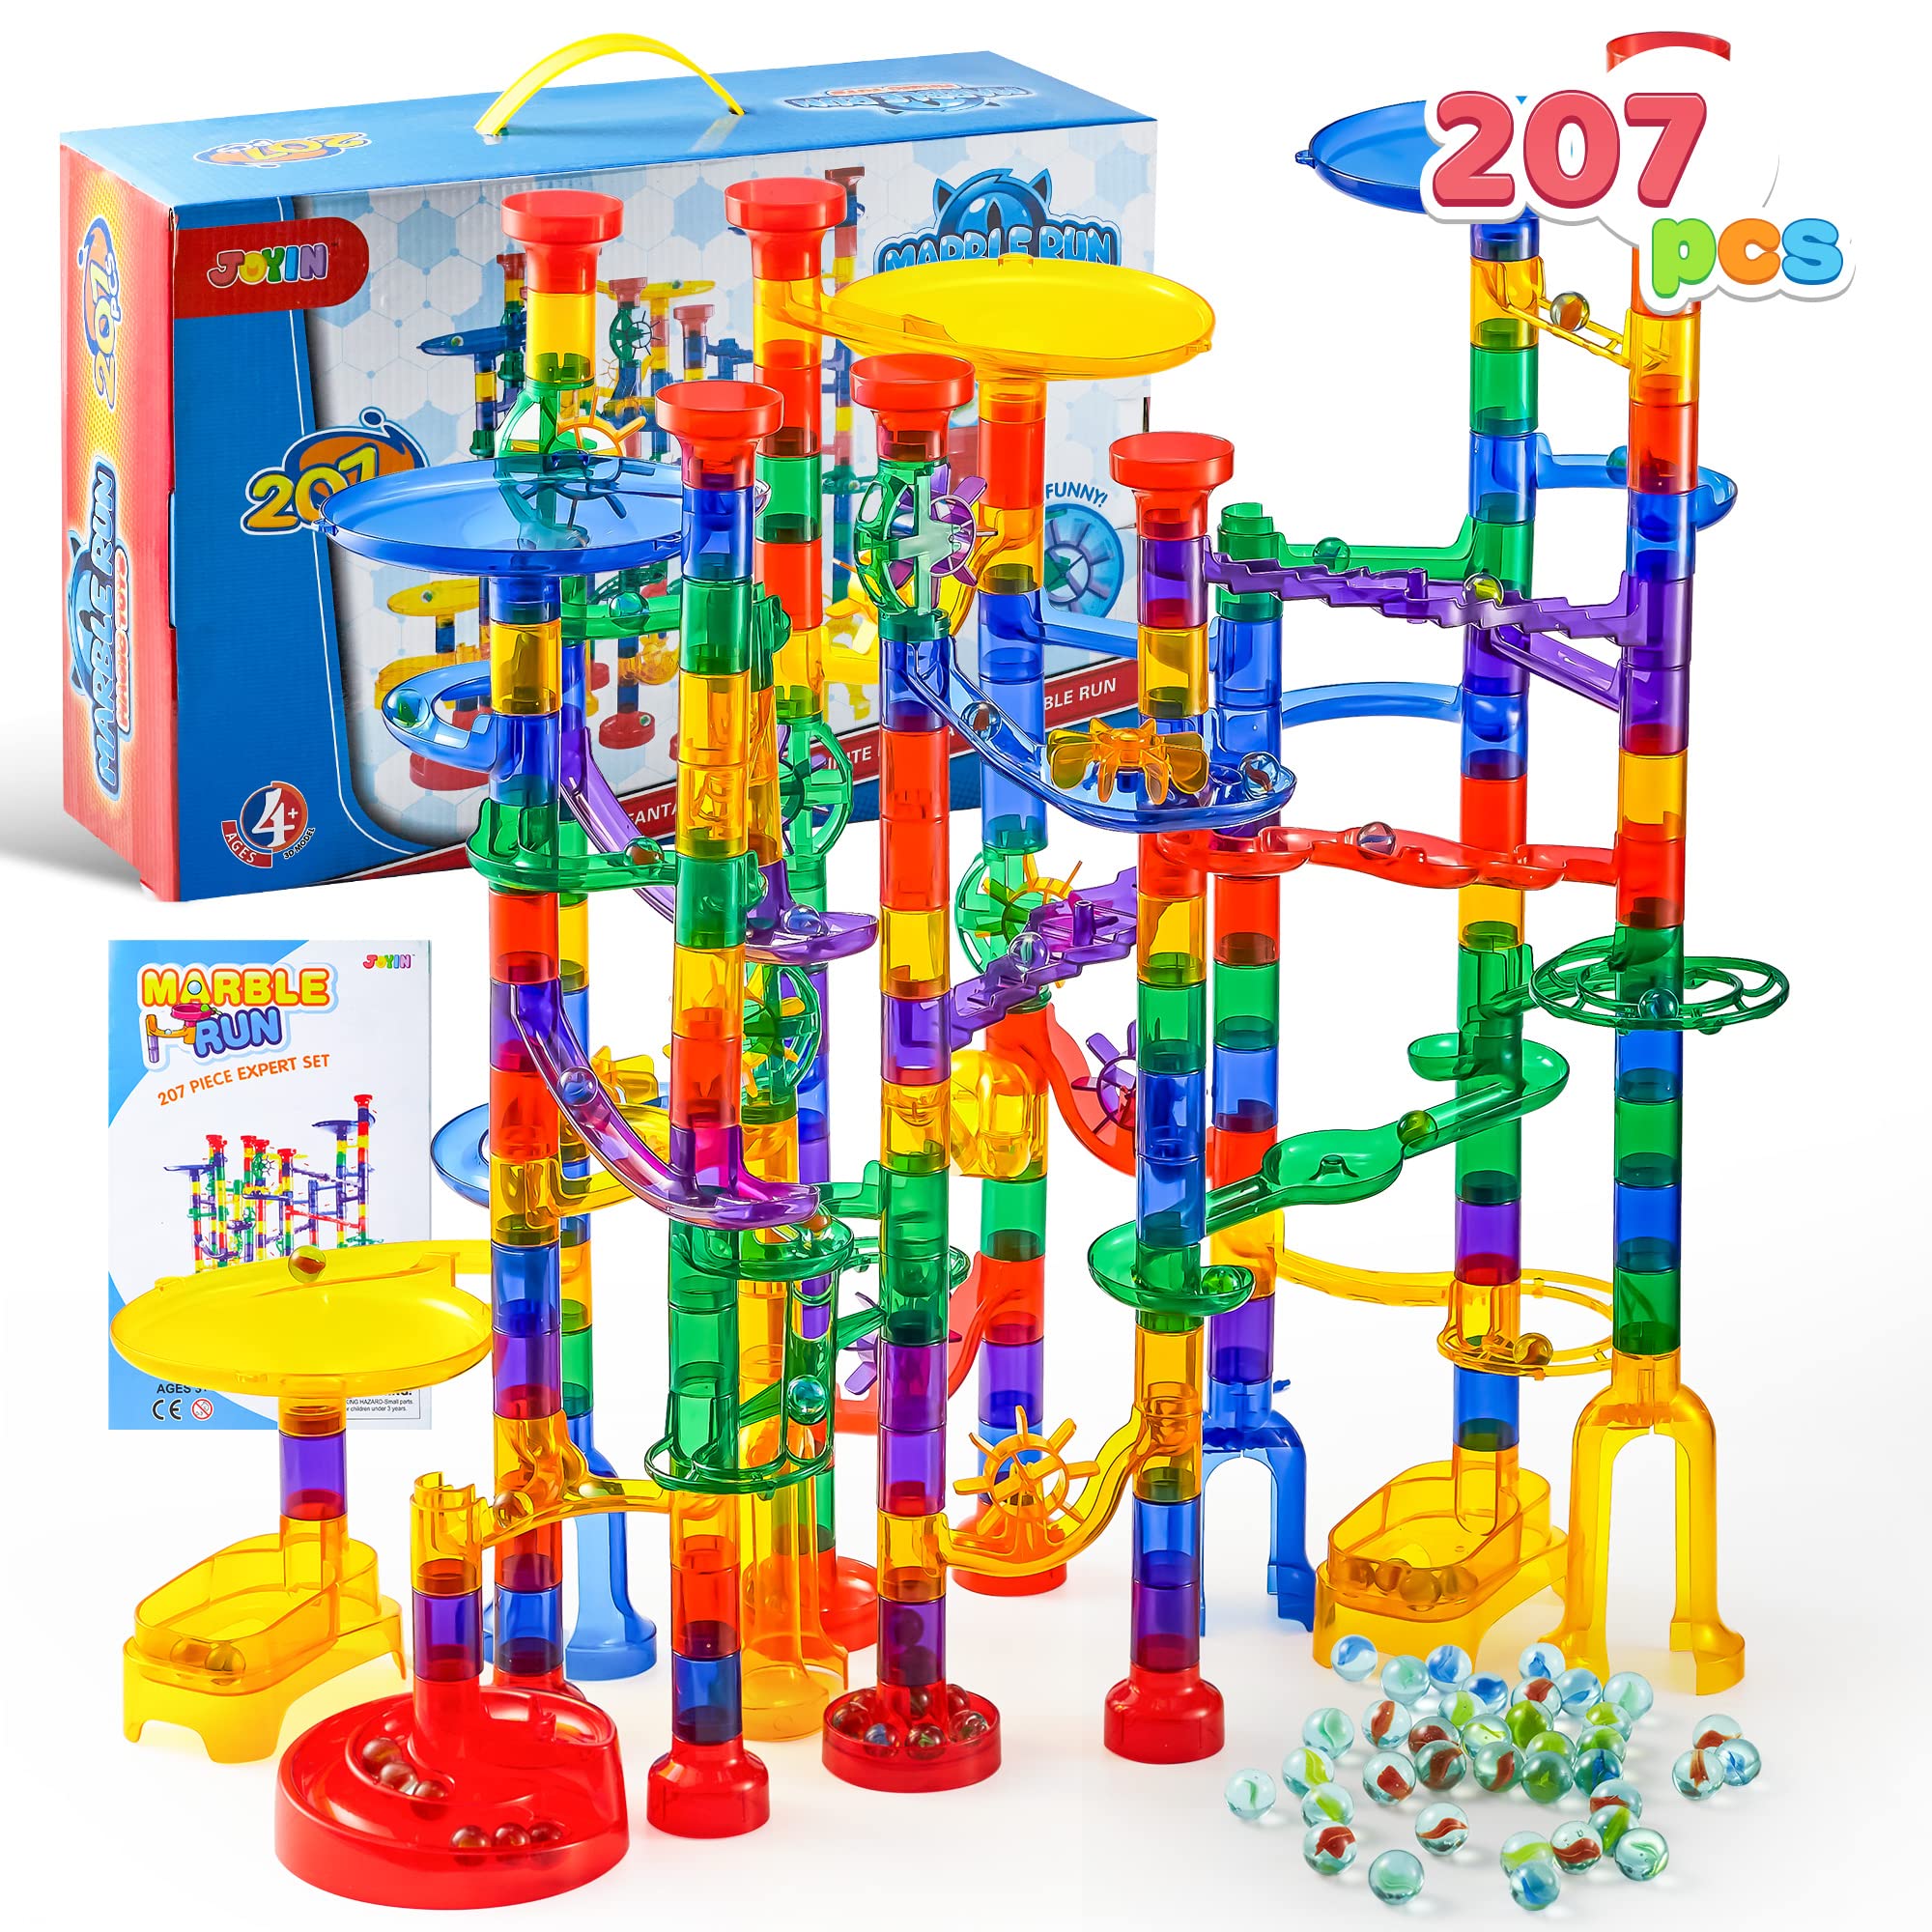 JOYIN 207pcs Marble Run Premium Toy Set Construction Building Blocks Toys Stem Educational Building Block Toy(147 Plastic Pieces + 60 Glass Marbles)